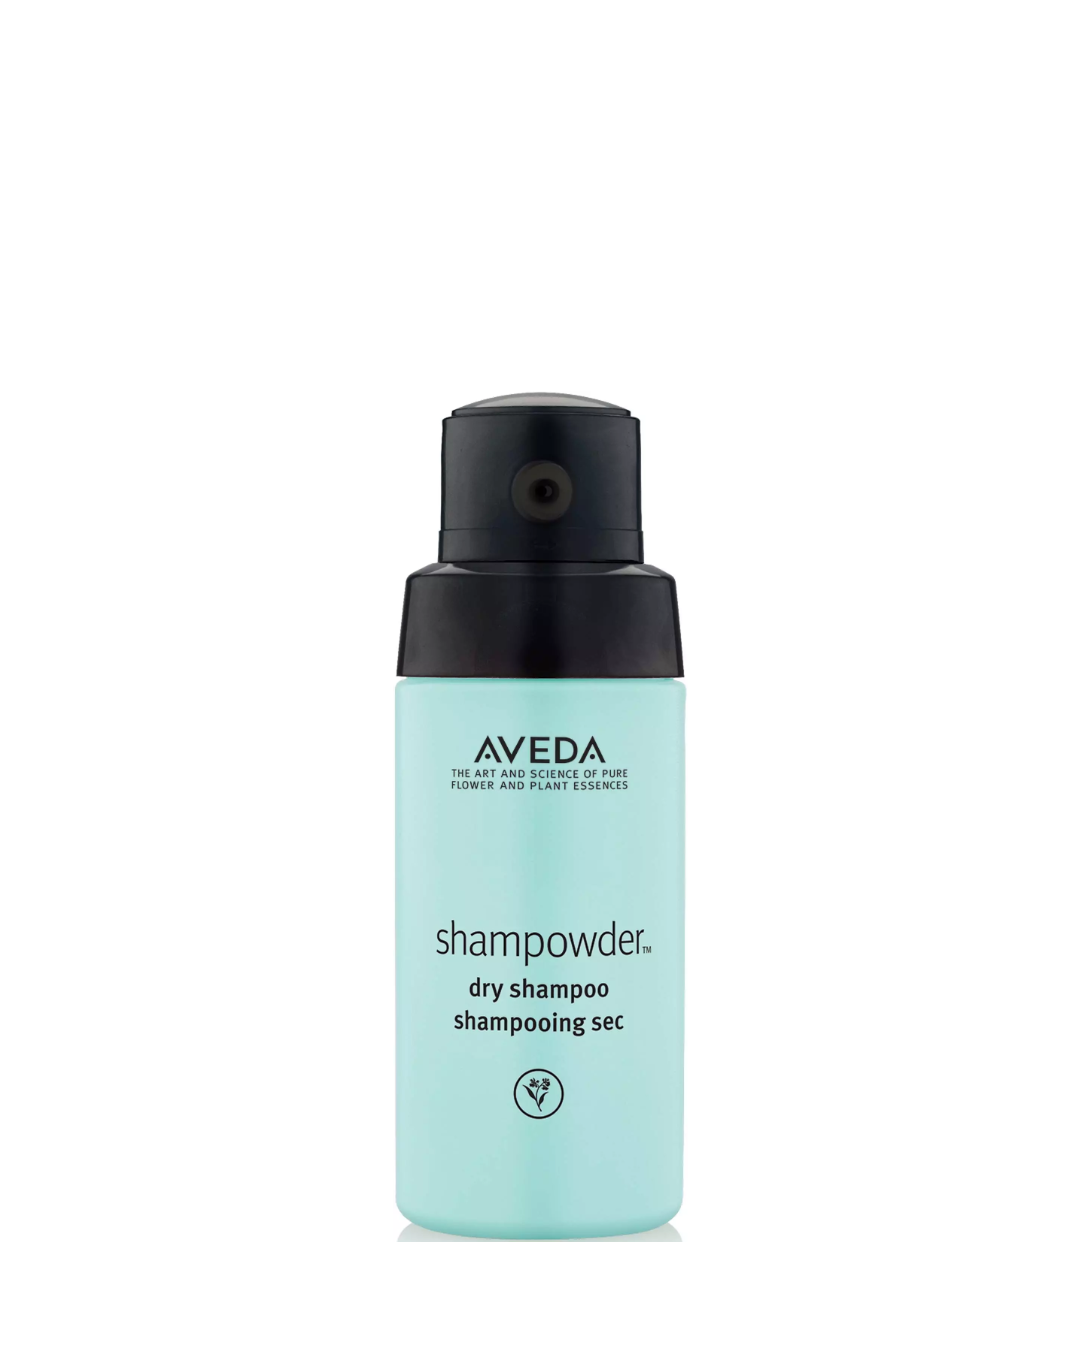 Shampowder Dry Shampoo